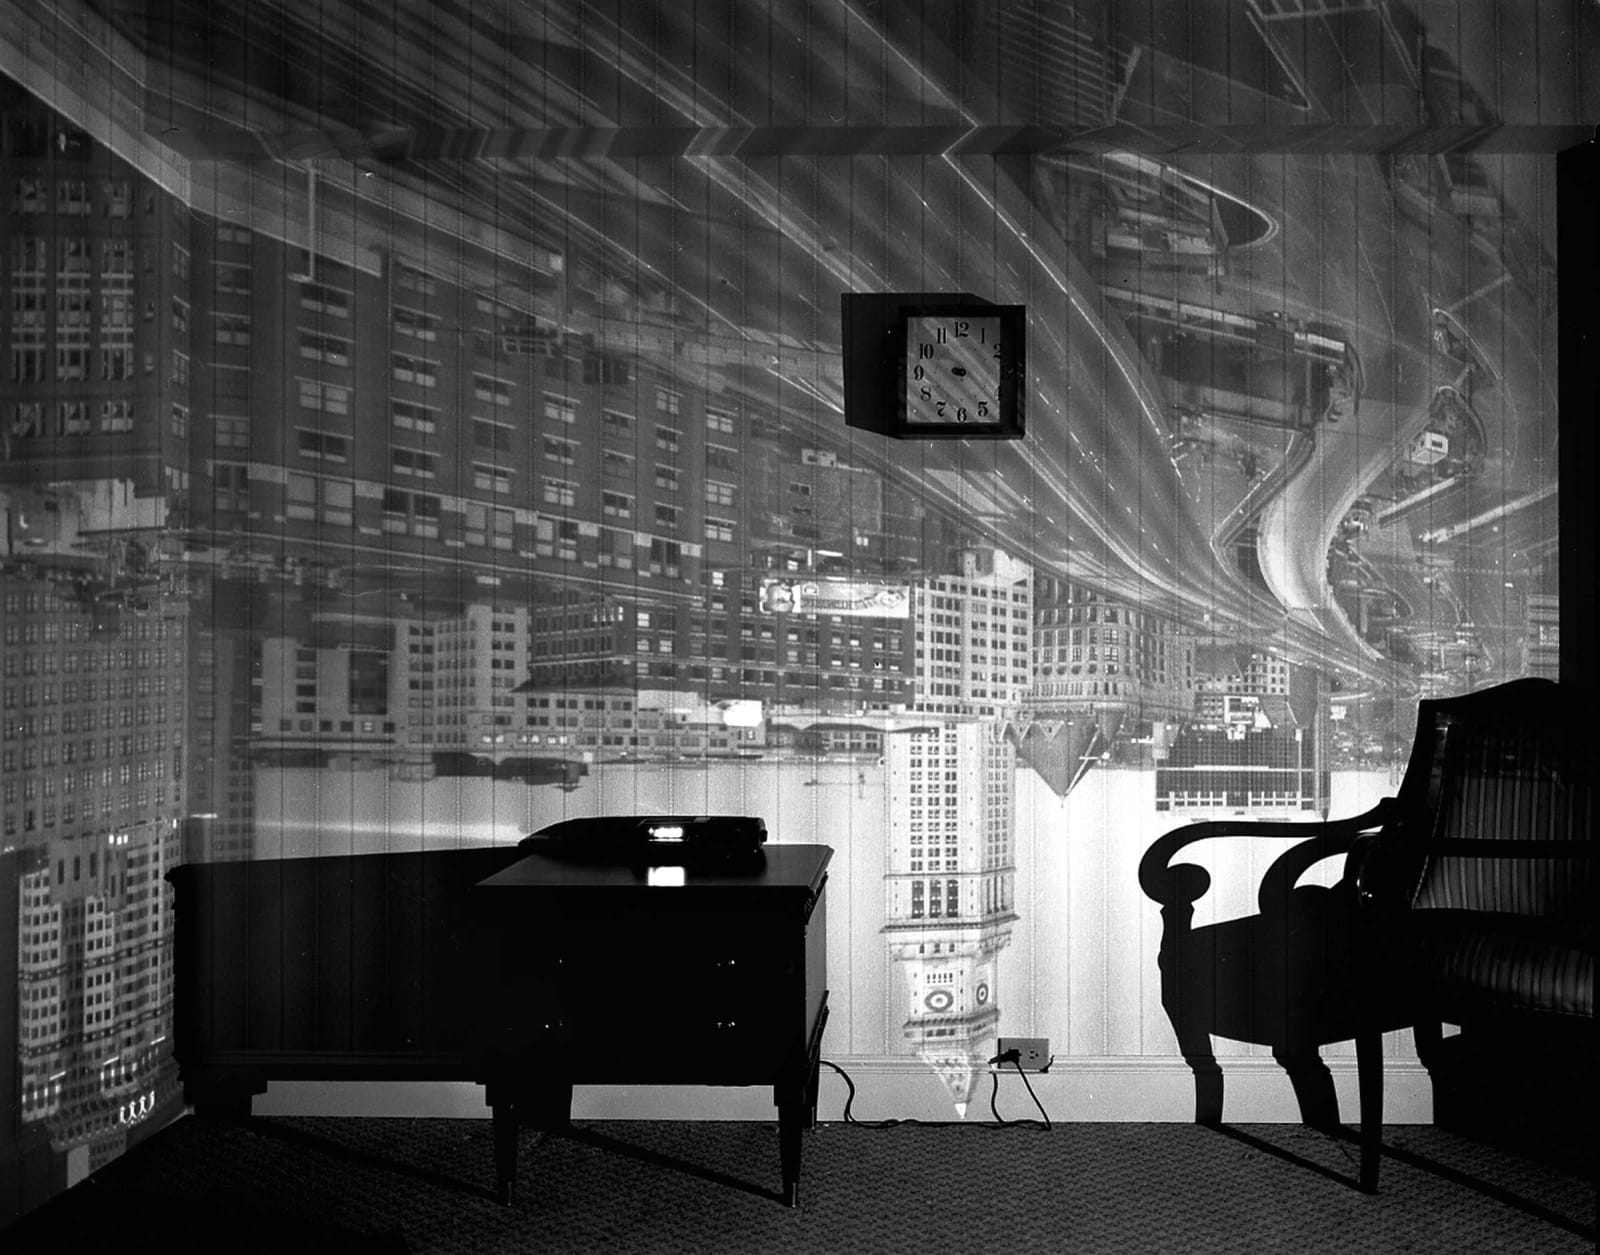 Abelardo Morell Camera Obscura Boston's Old Custom House in Hotel Room in black and white